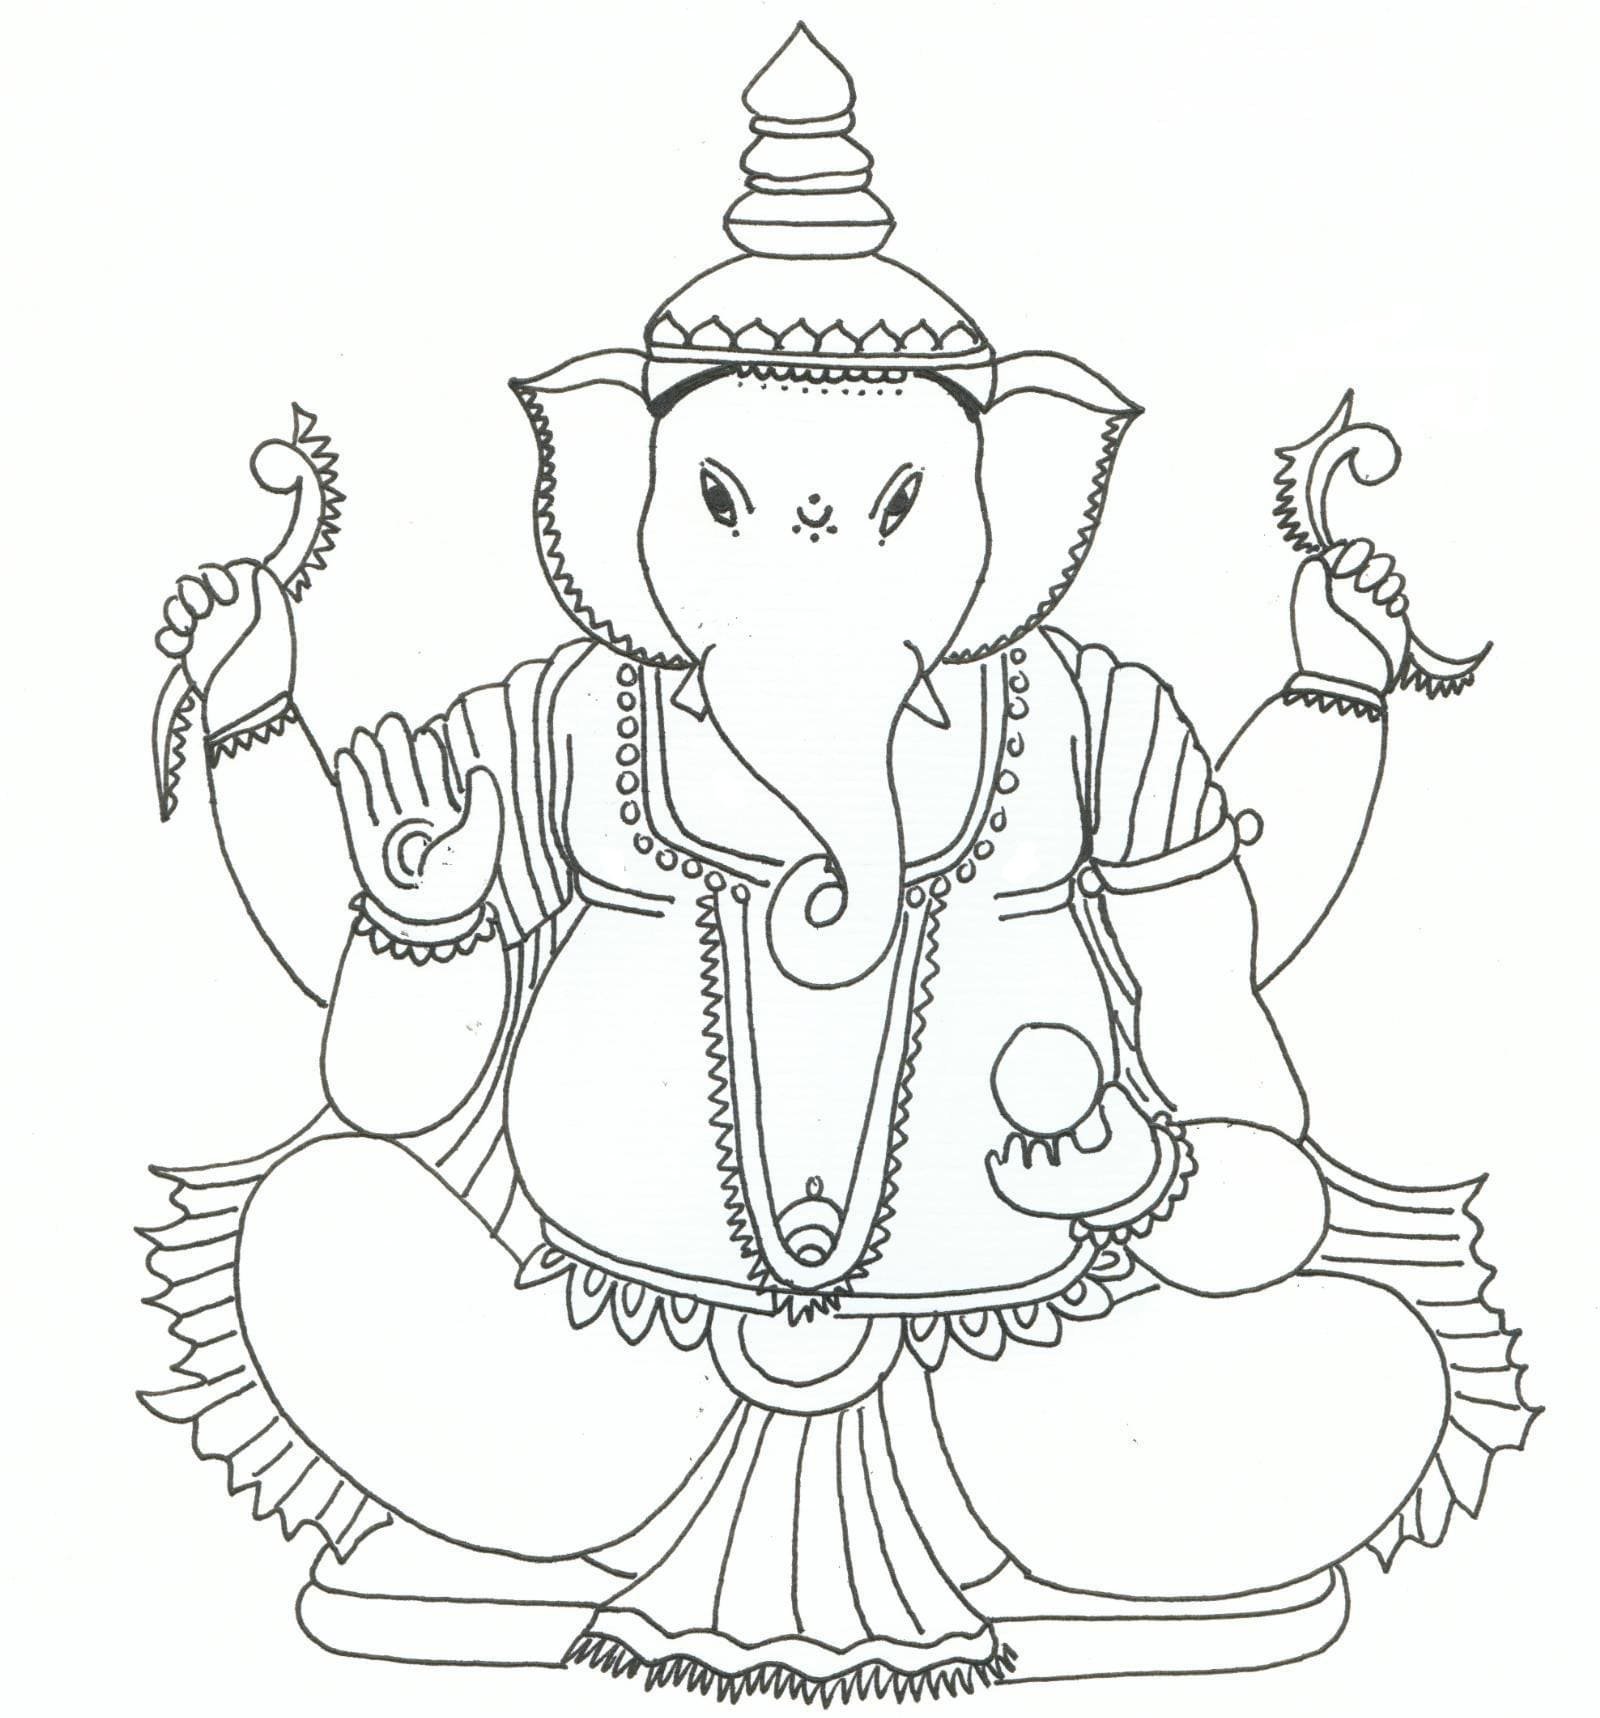 Индийский Бог Ганеша рисунок